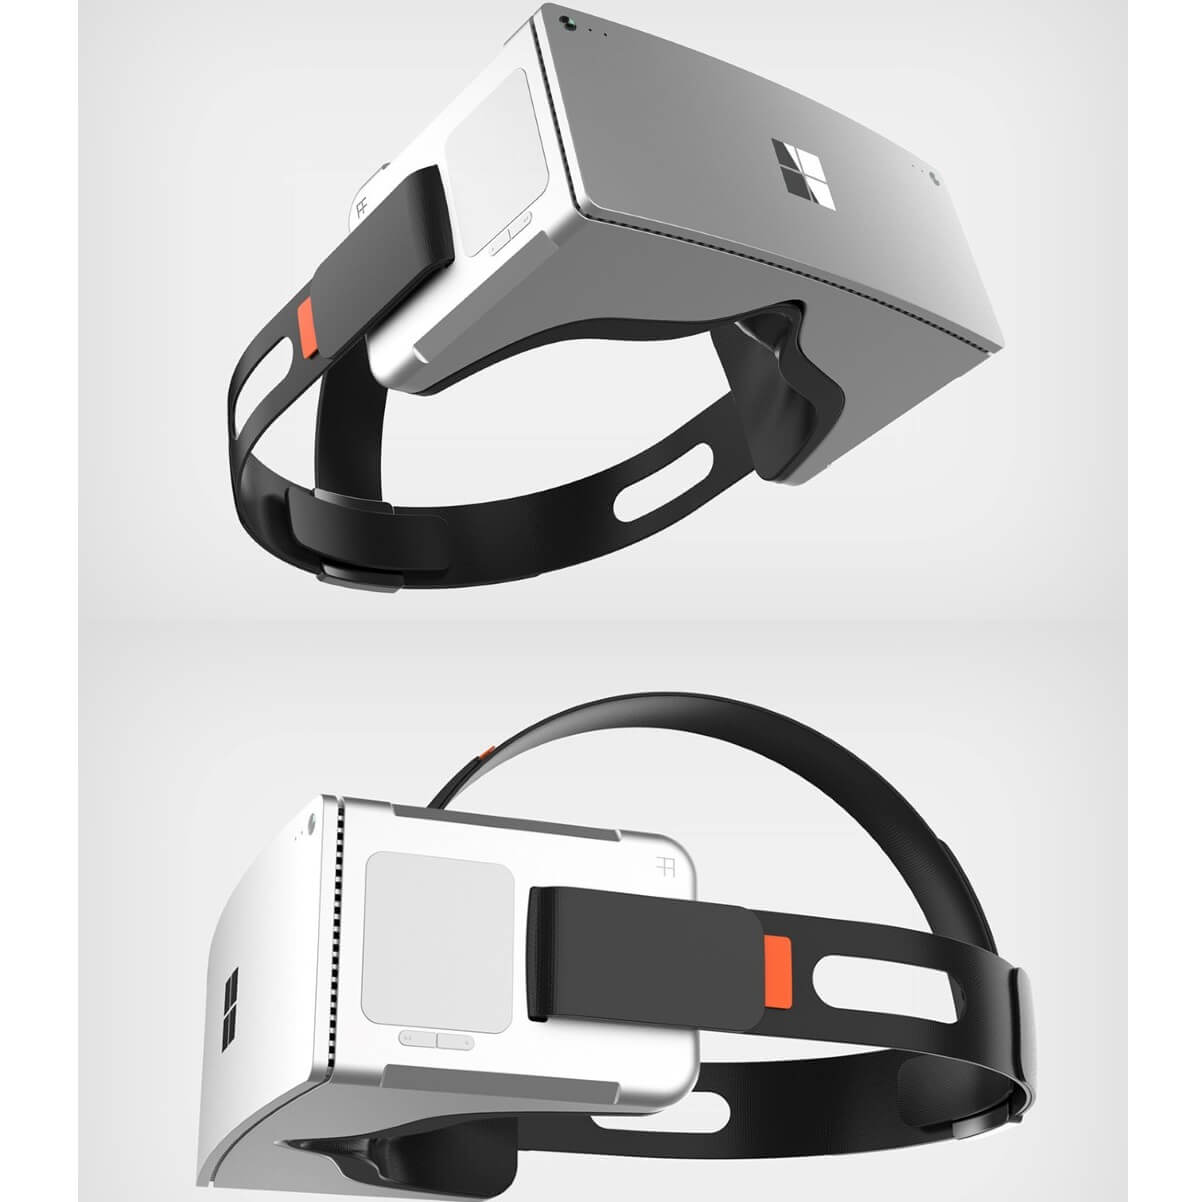 Surface VR headset design concept